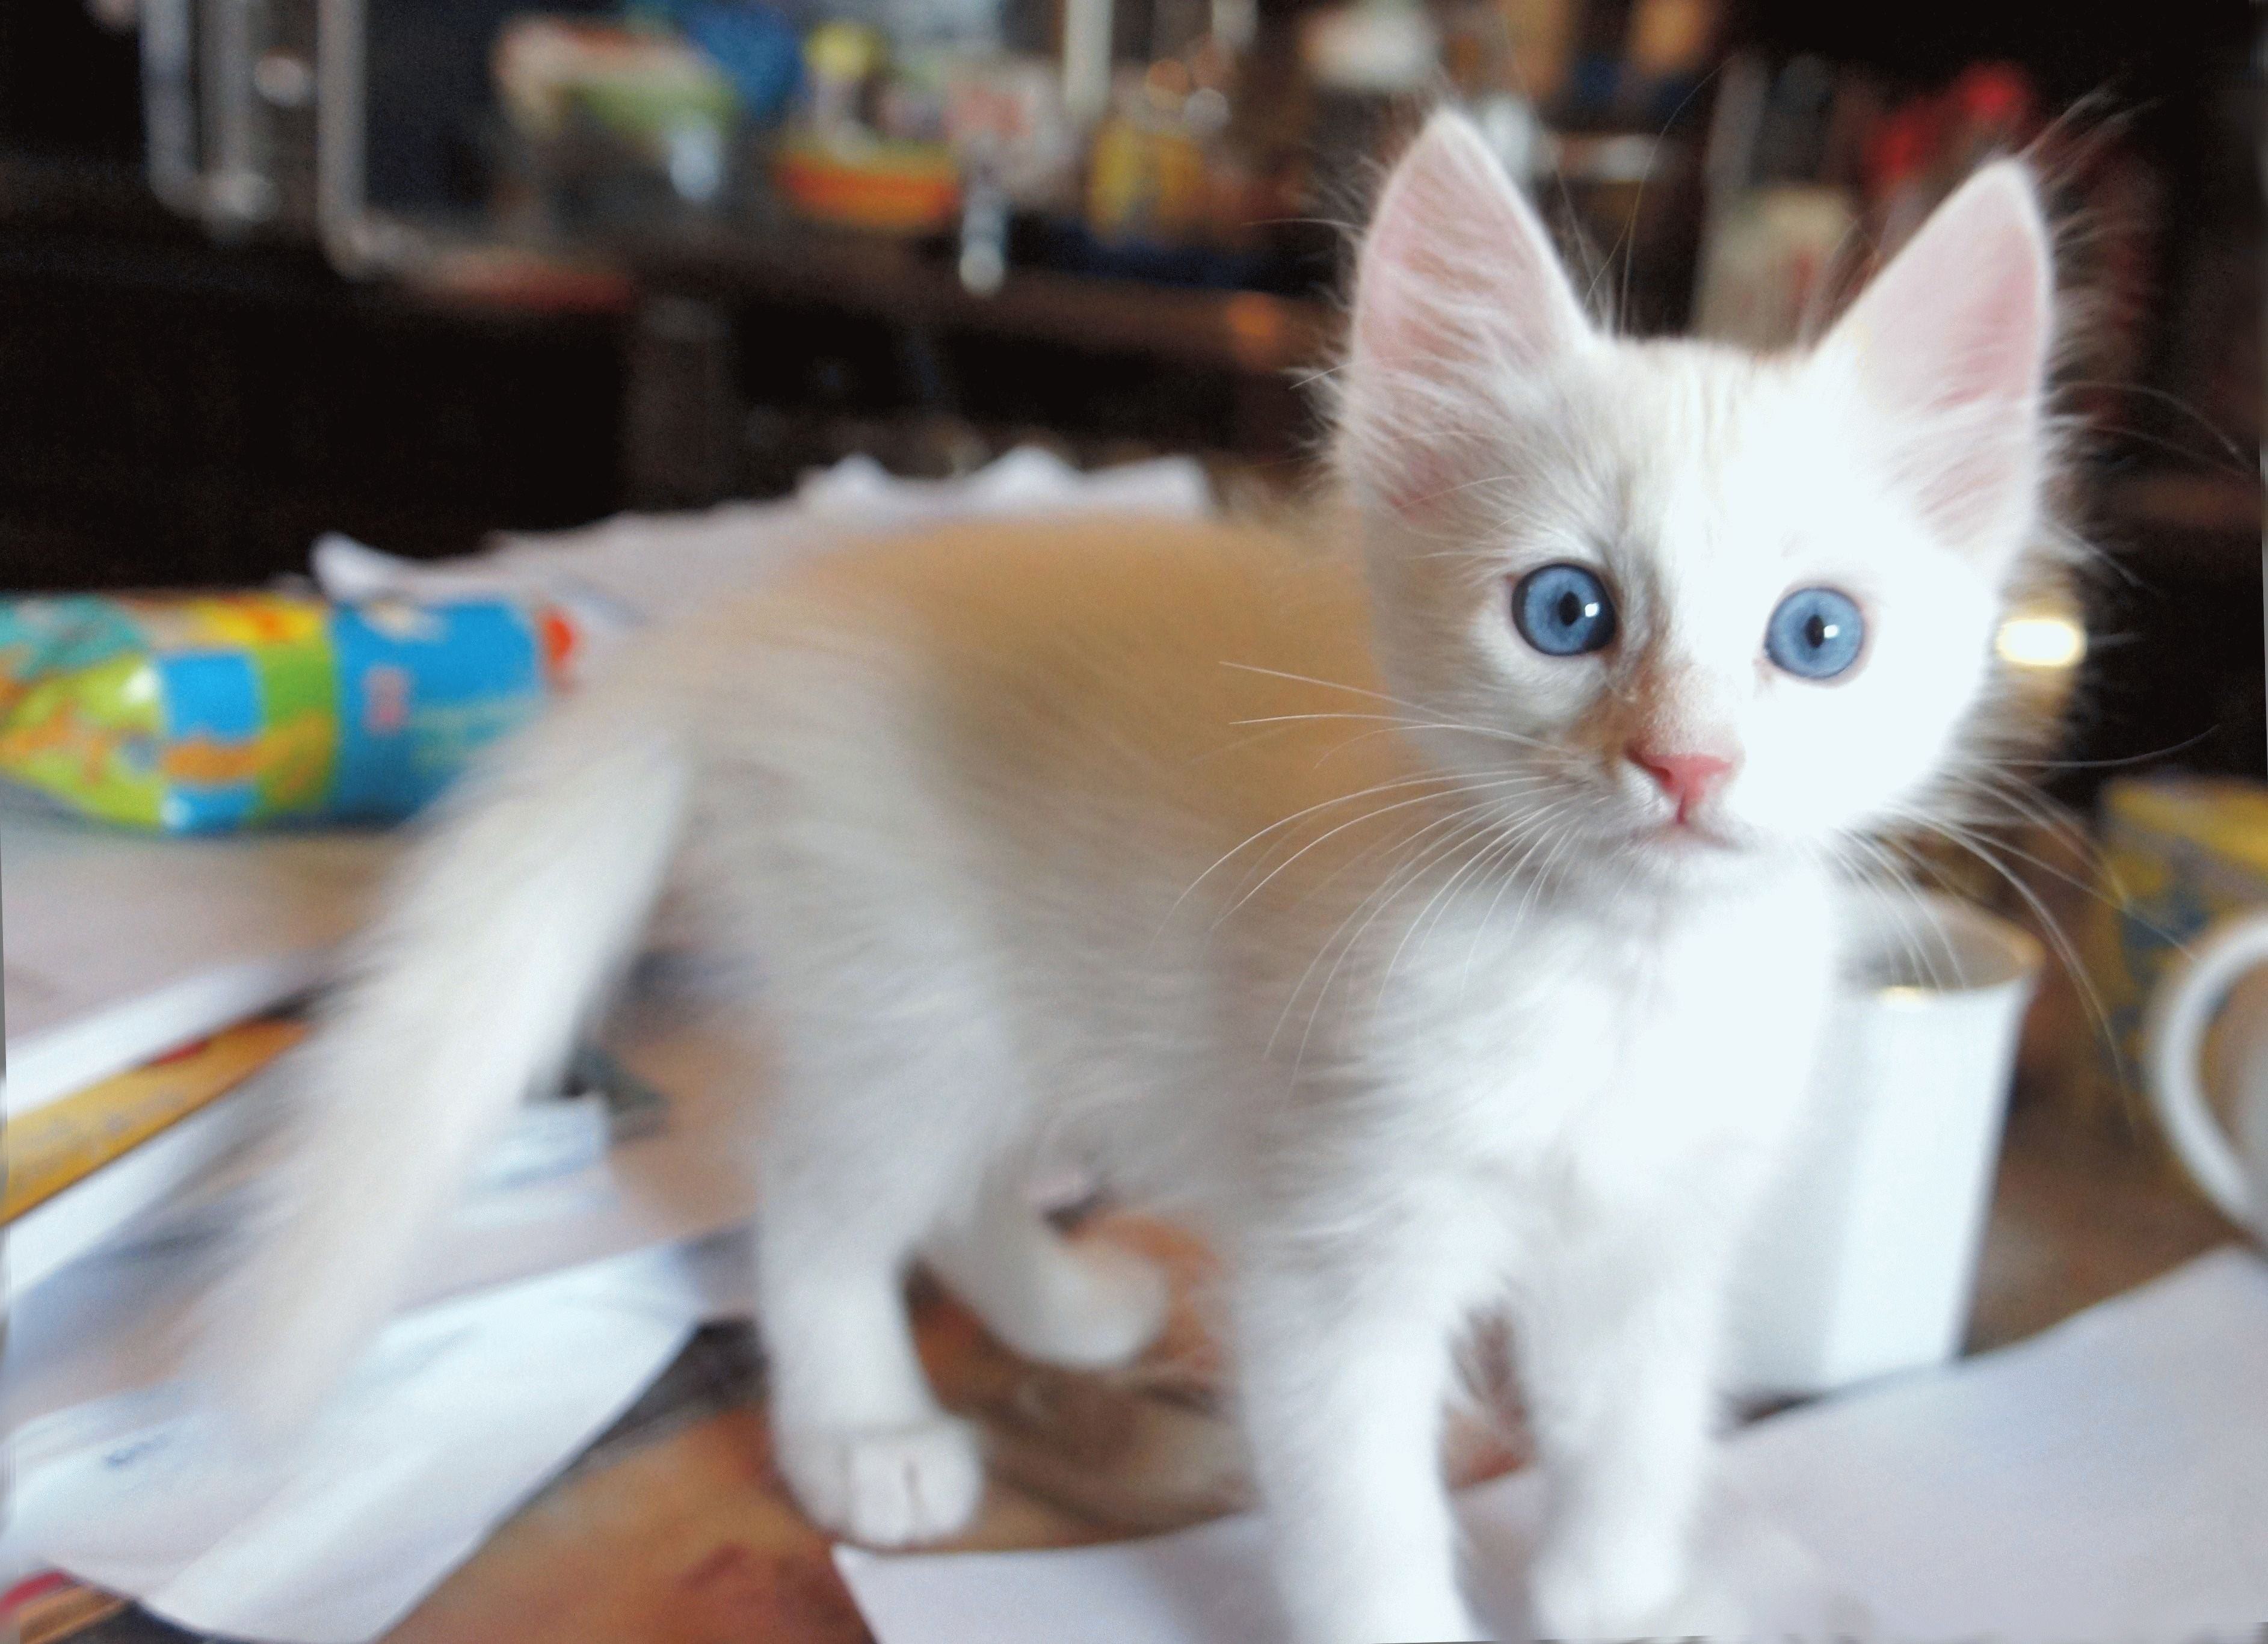 Возьму белую кошку. Турецкая ангорская котенок белый. Турецкая ангора белая. Турецкая ангора котята белые. Турецкая ангорская кошка короткошерстная.